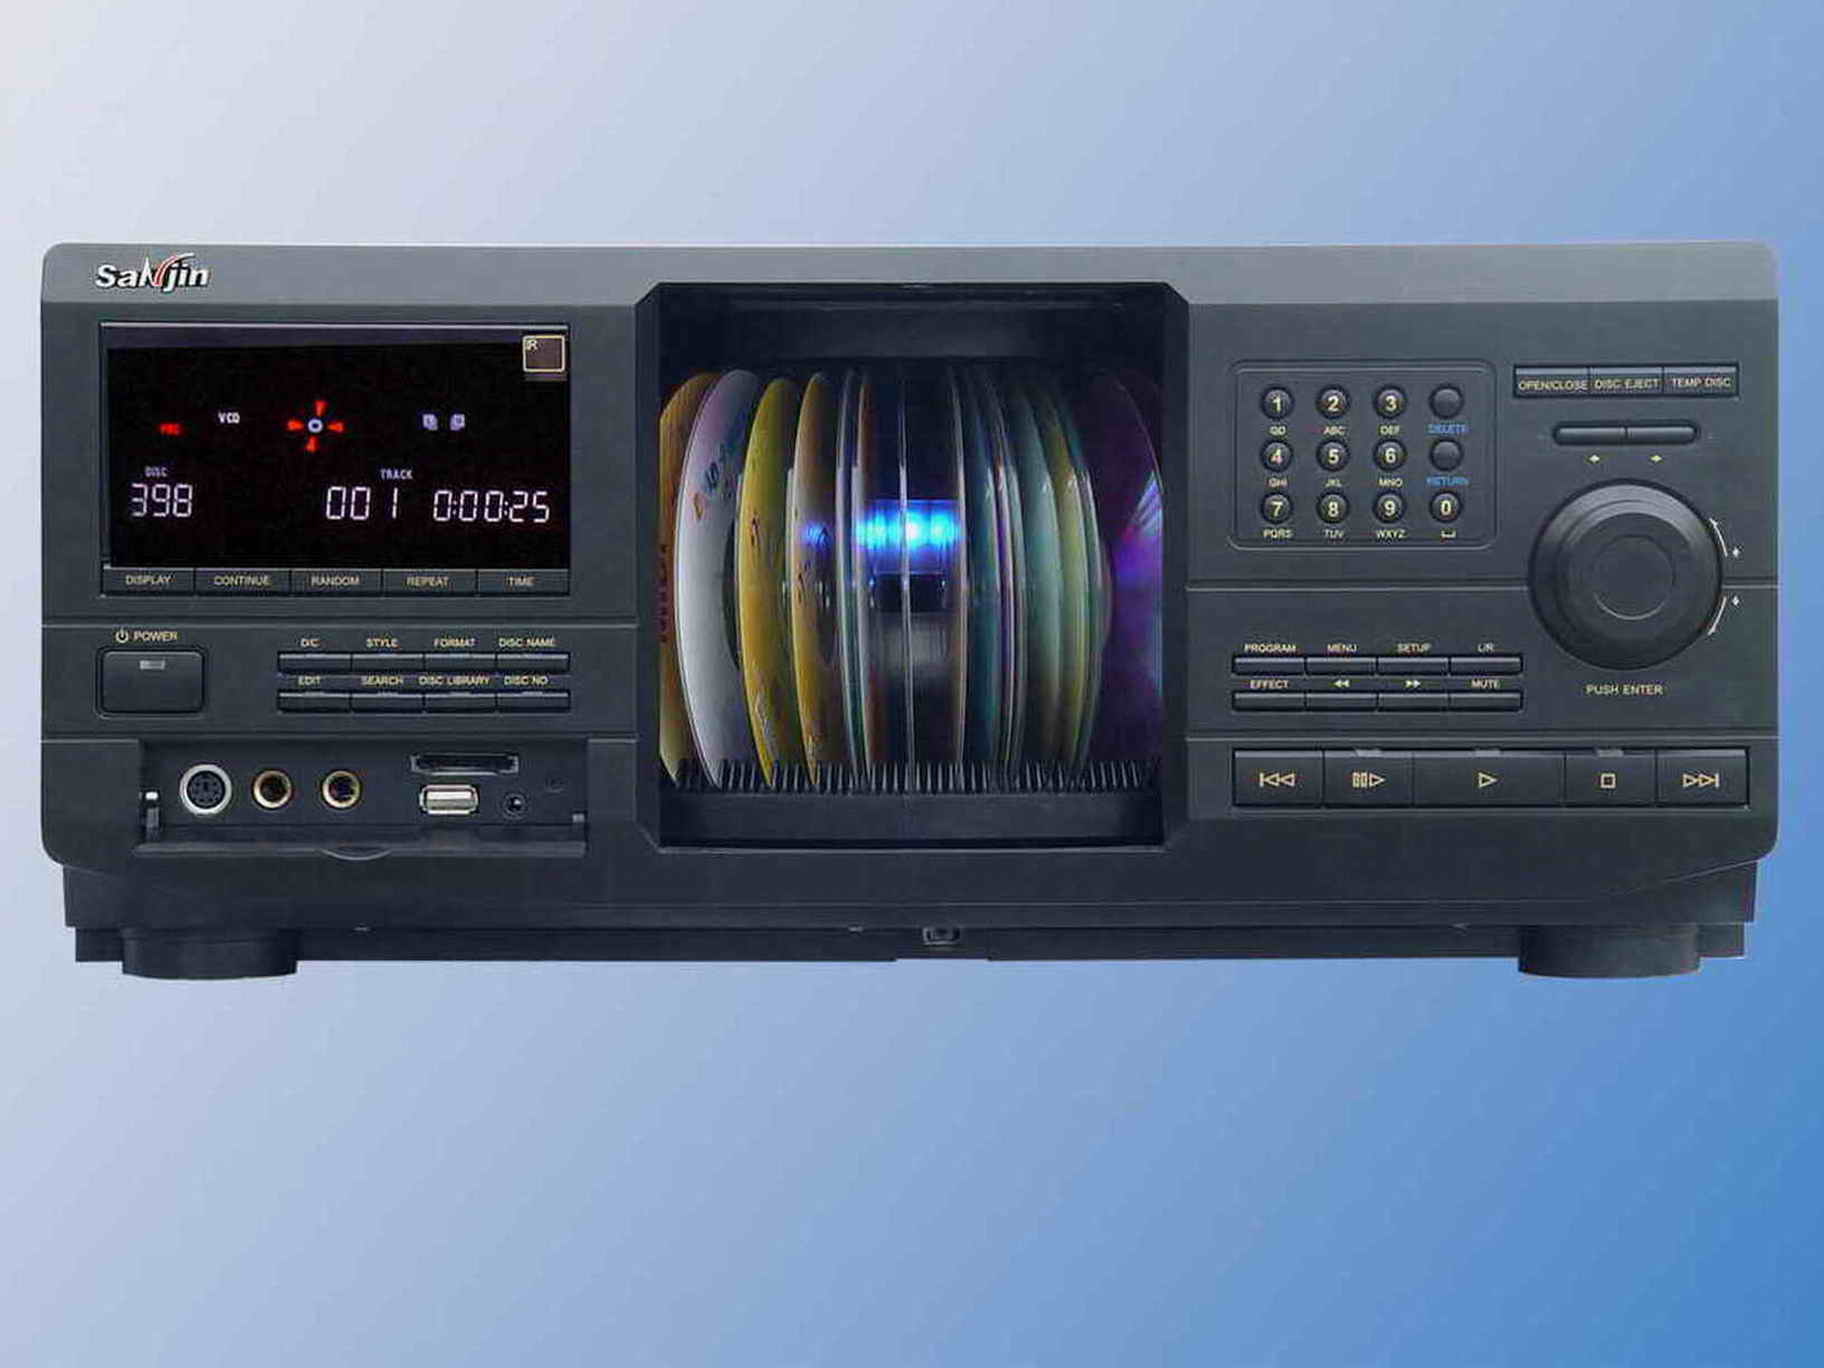 Mega Storage 400 Disc DVD Changer With CD G Karaoke (Mega хранения 400 дисков DVD CD чейнджер на G Караоке)